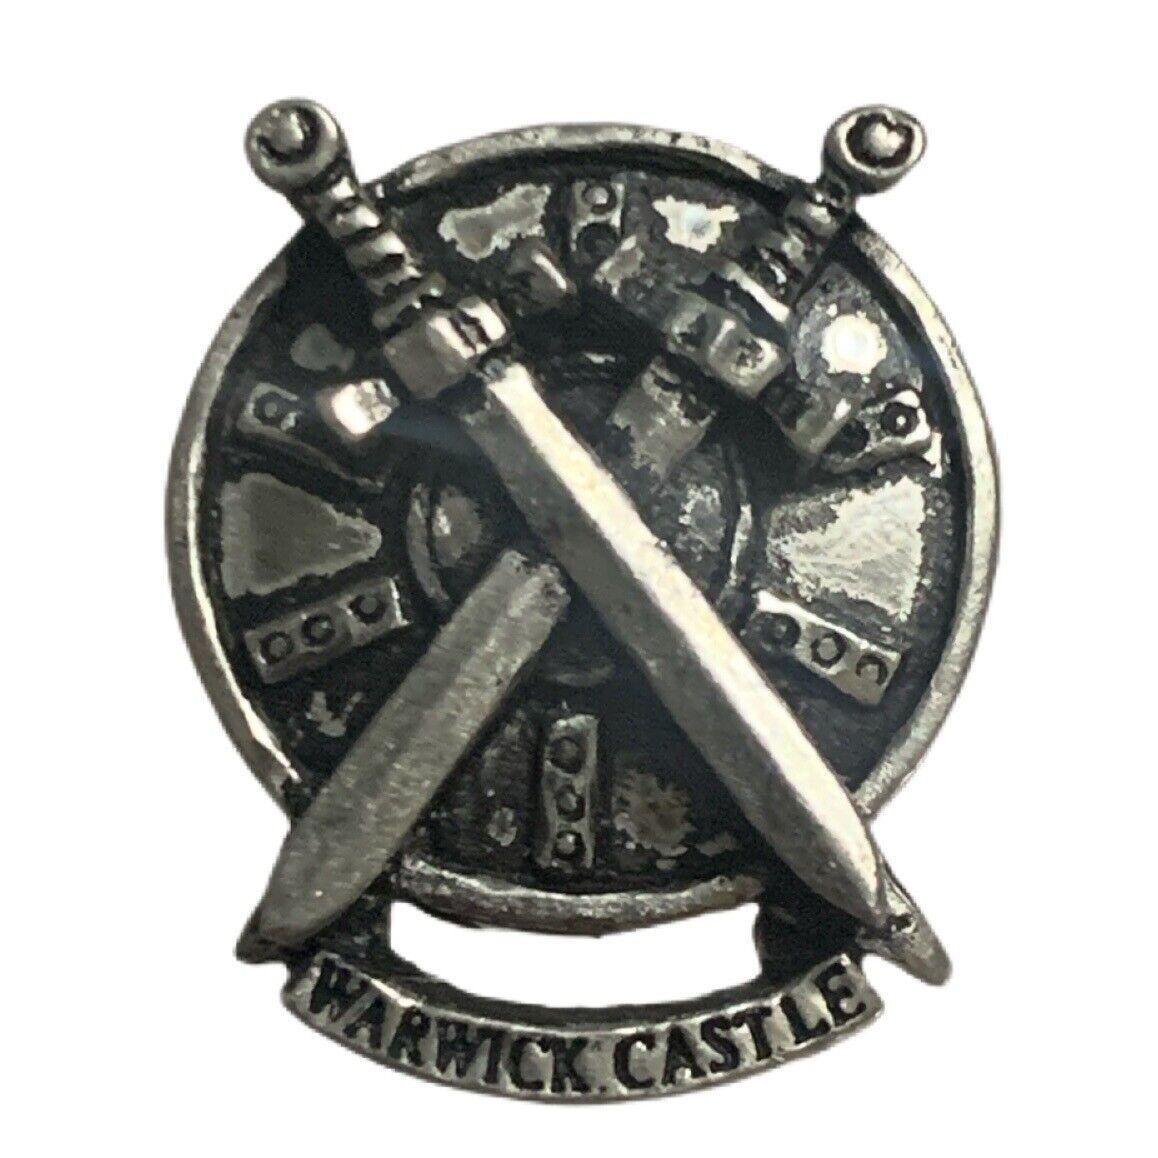 Vintage Warwick Castle England Swords Shield Travel Souvenir Pin